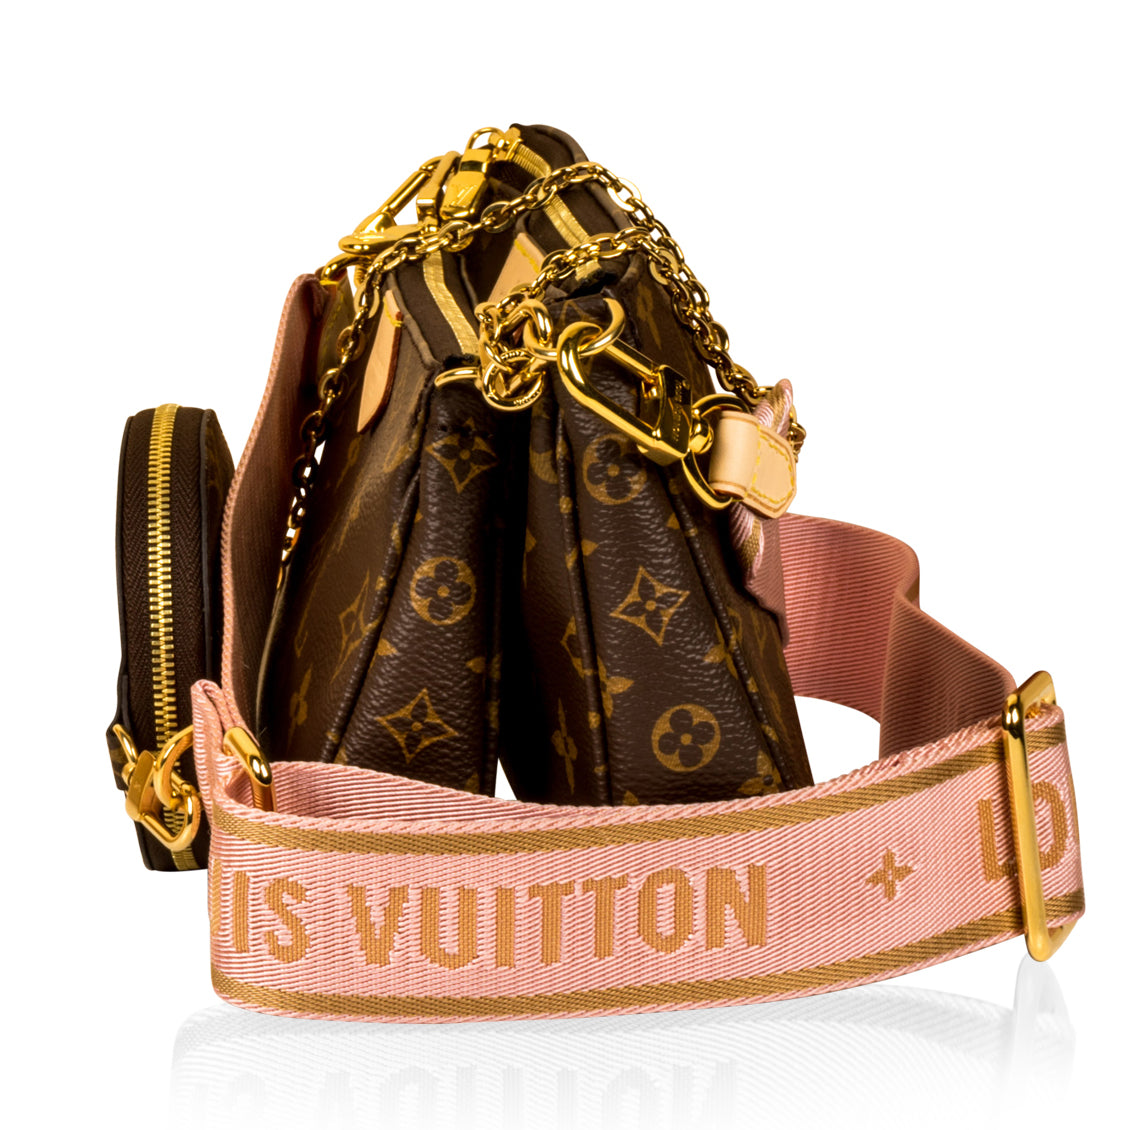 Louis Vuitton - Multi Pochette Accessoires - Rosa Chiaro - Monogram Canvas - Women - Luxury